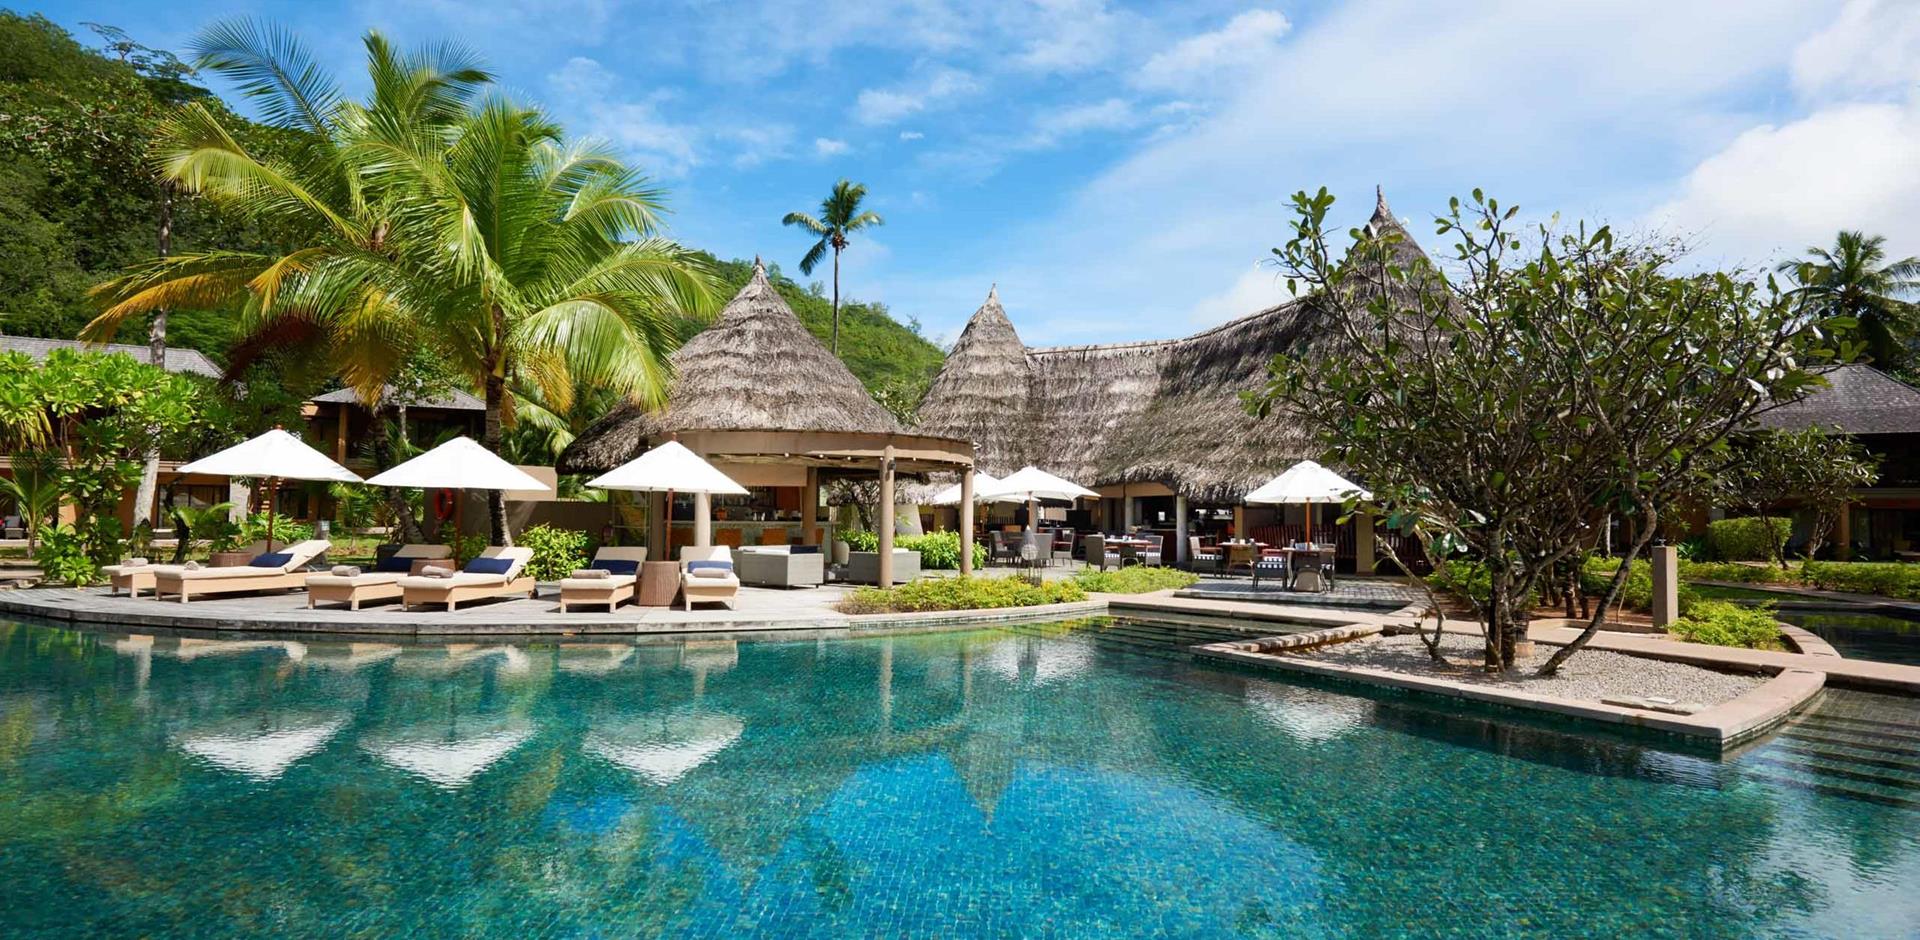 Constance Ephelia Resort, Seychelles, A&K